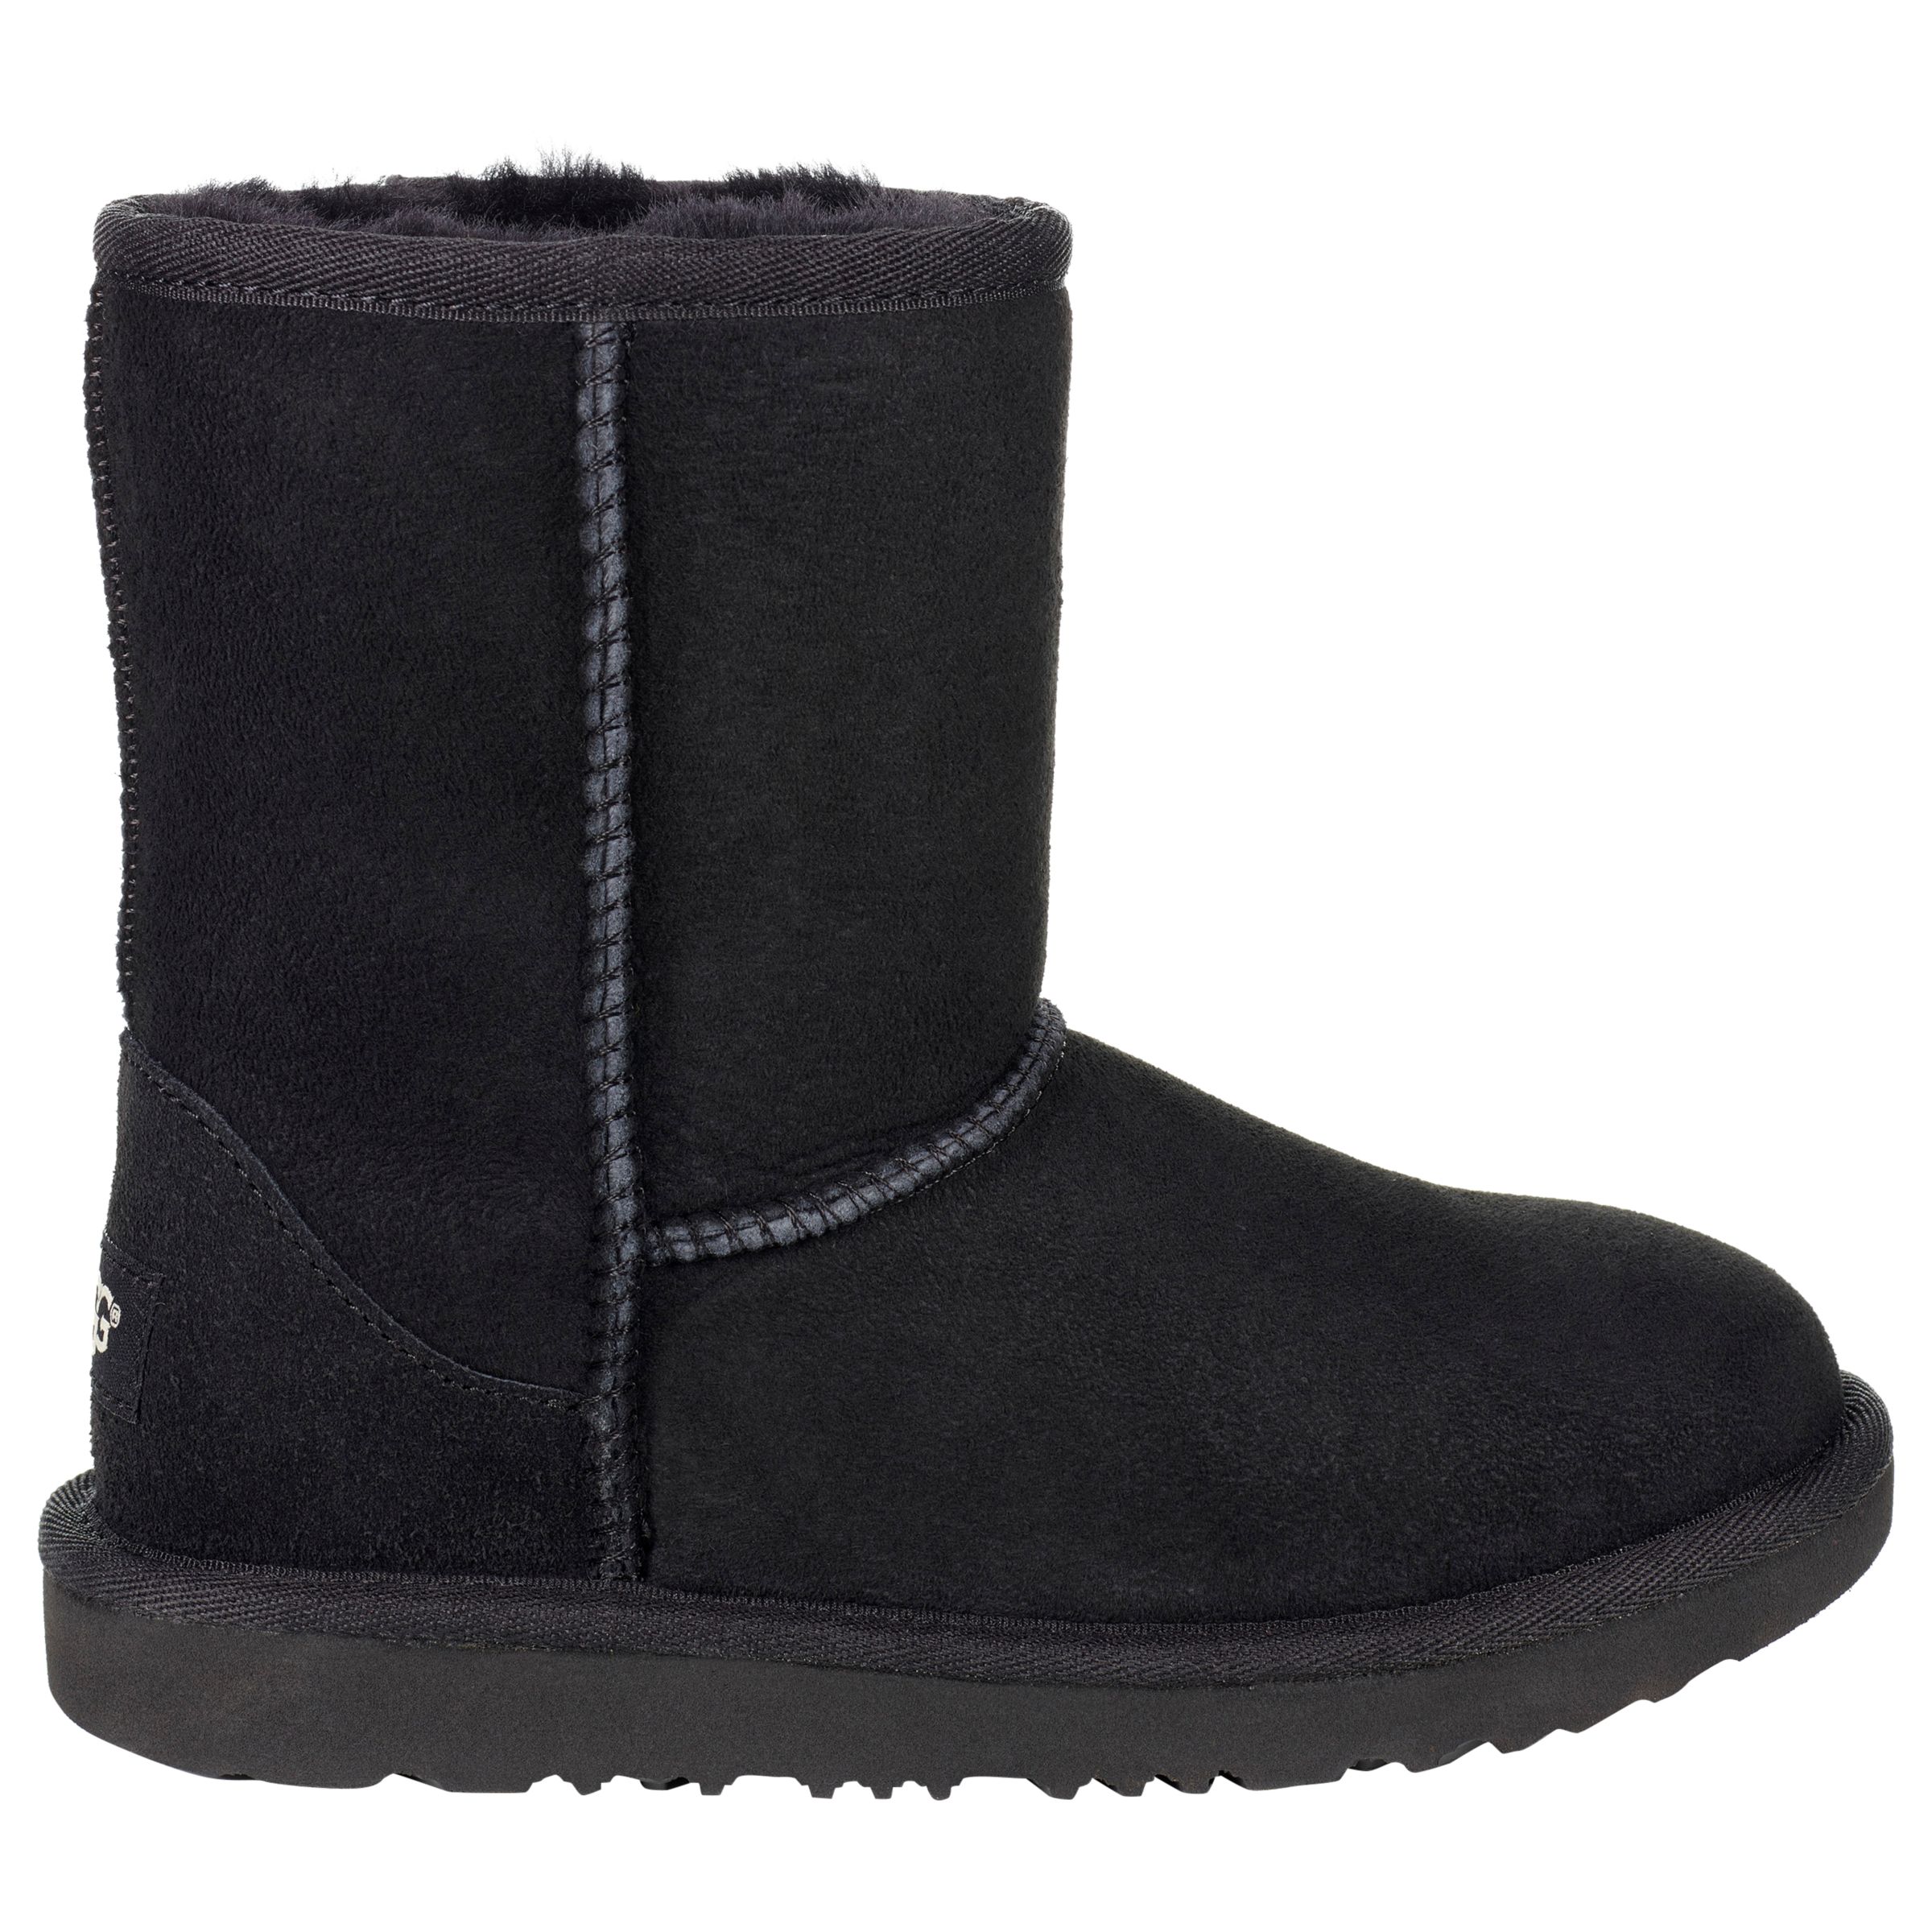 sheepskin style boots